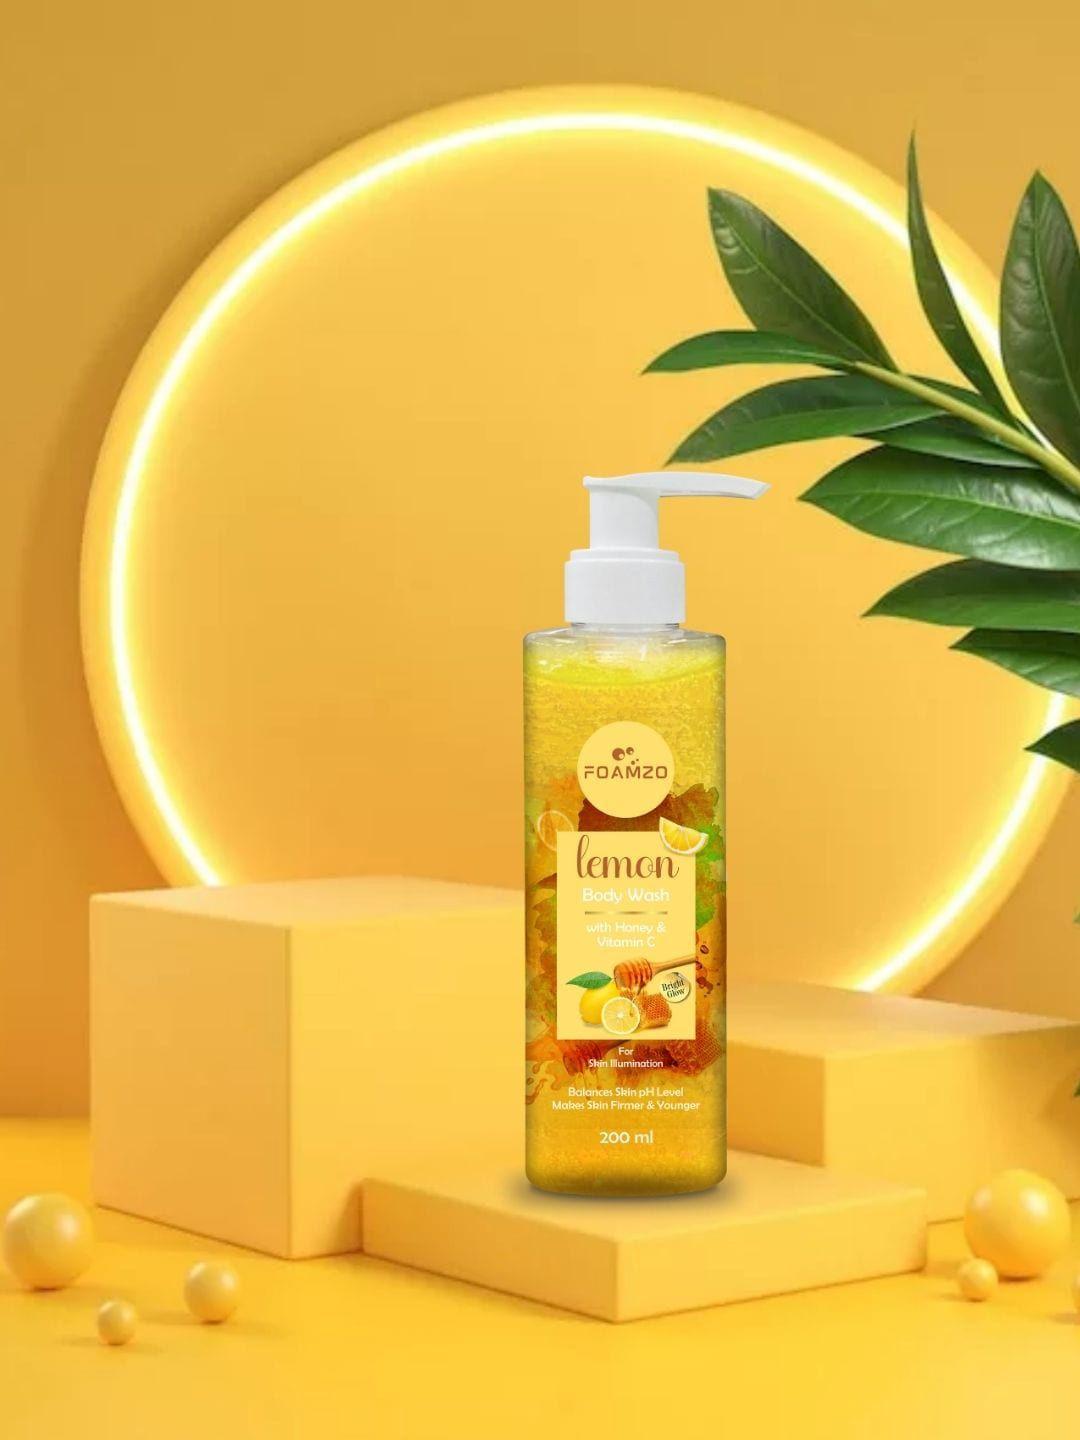 foamzo lemon & honey body wash with vitamin c for skin illumination - 200 ml